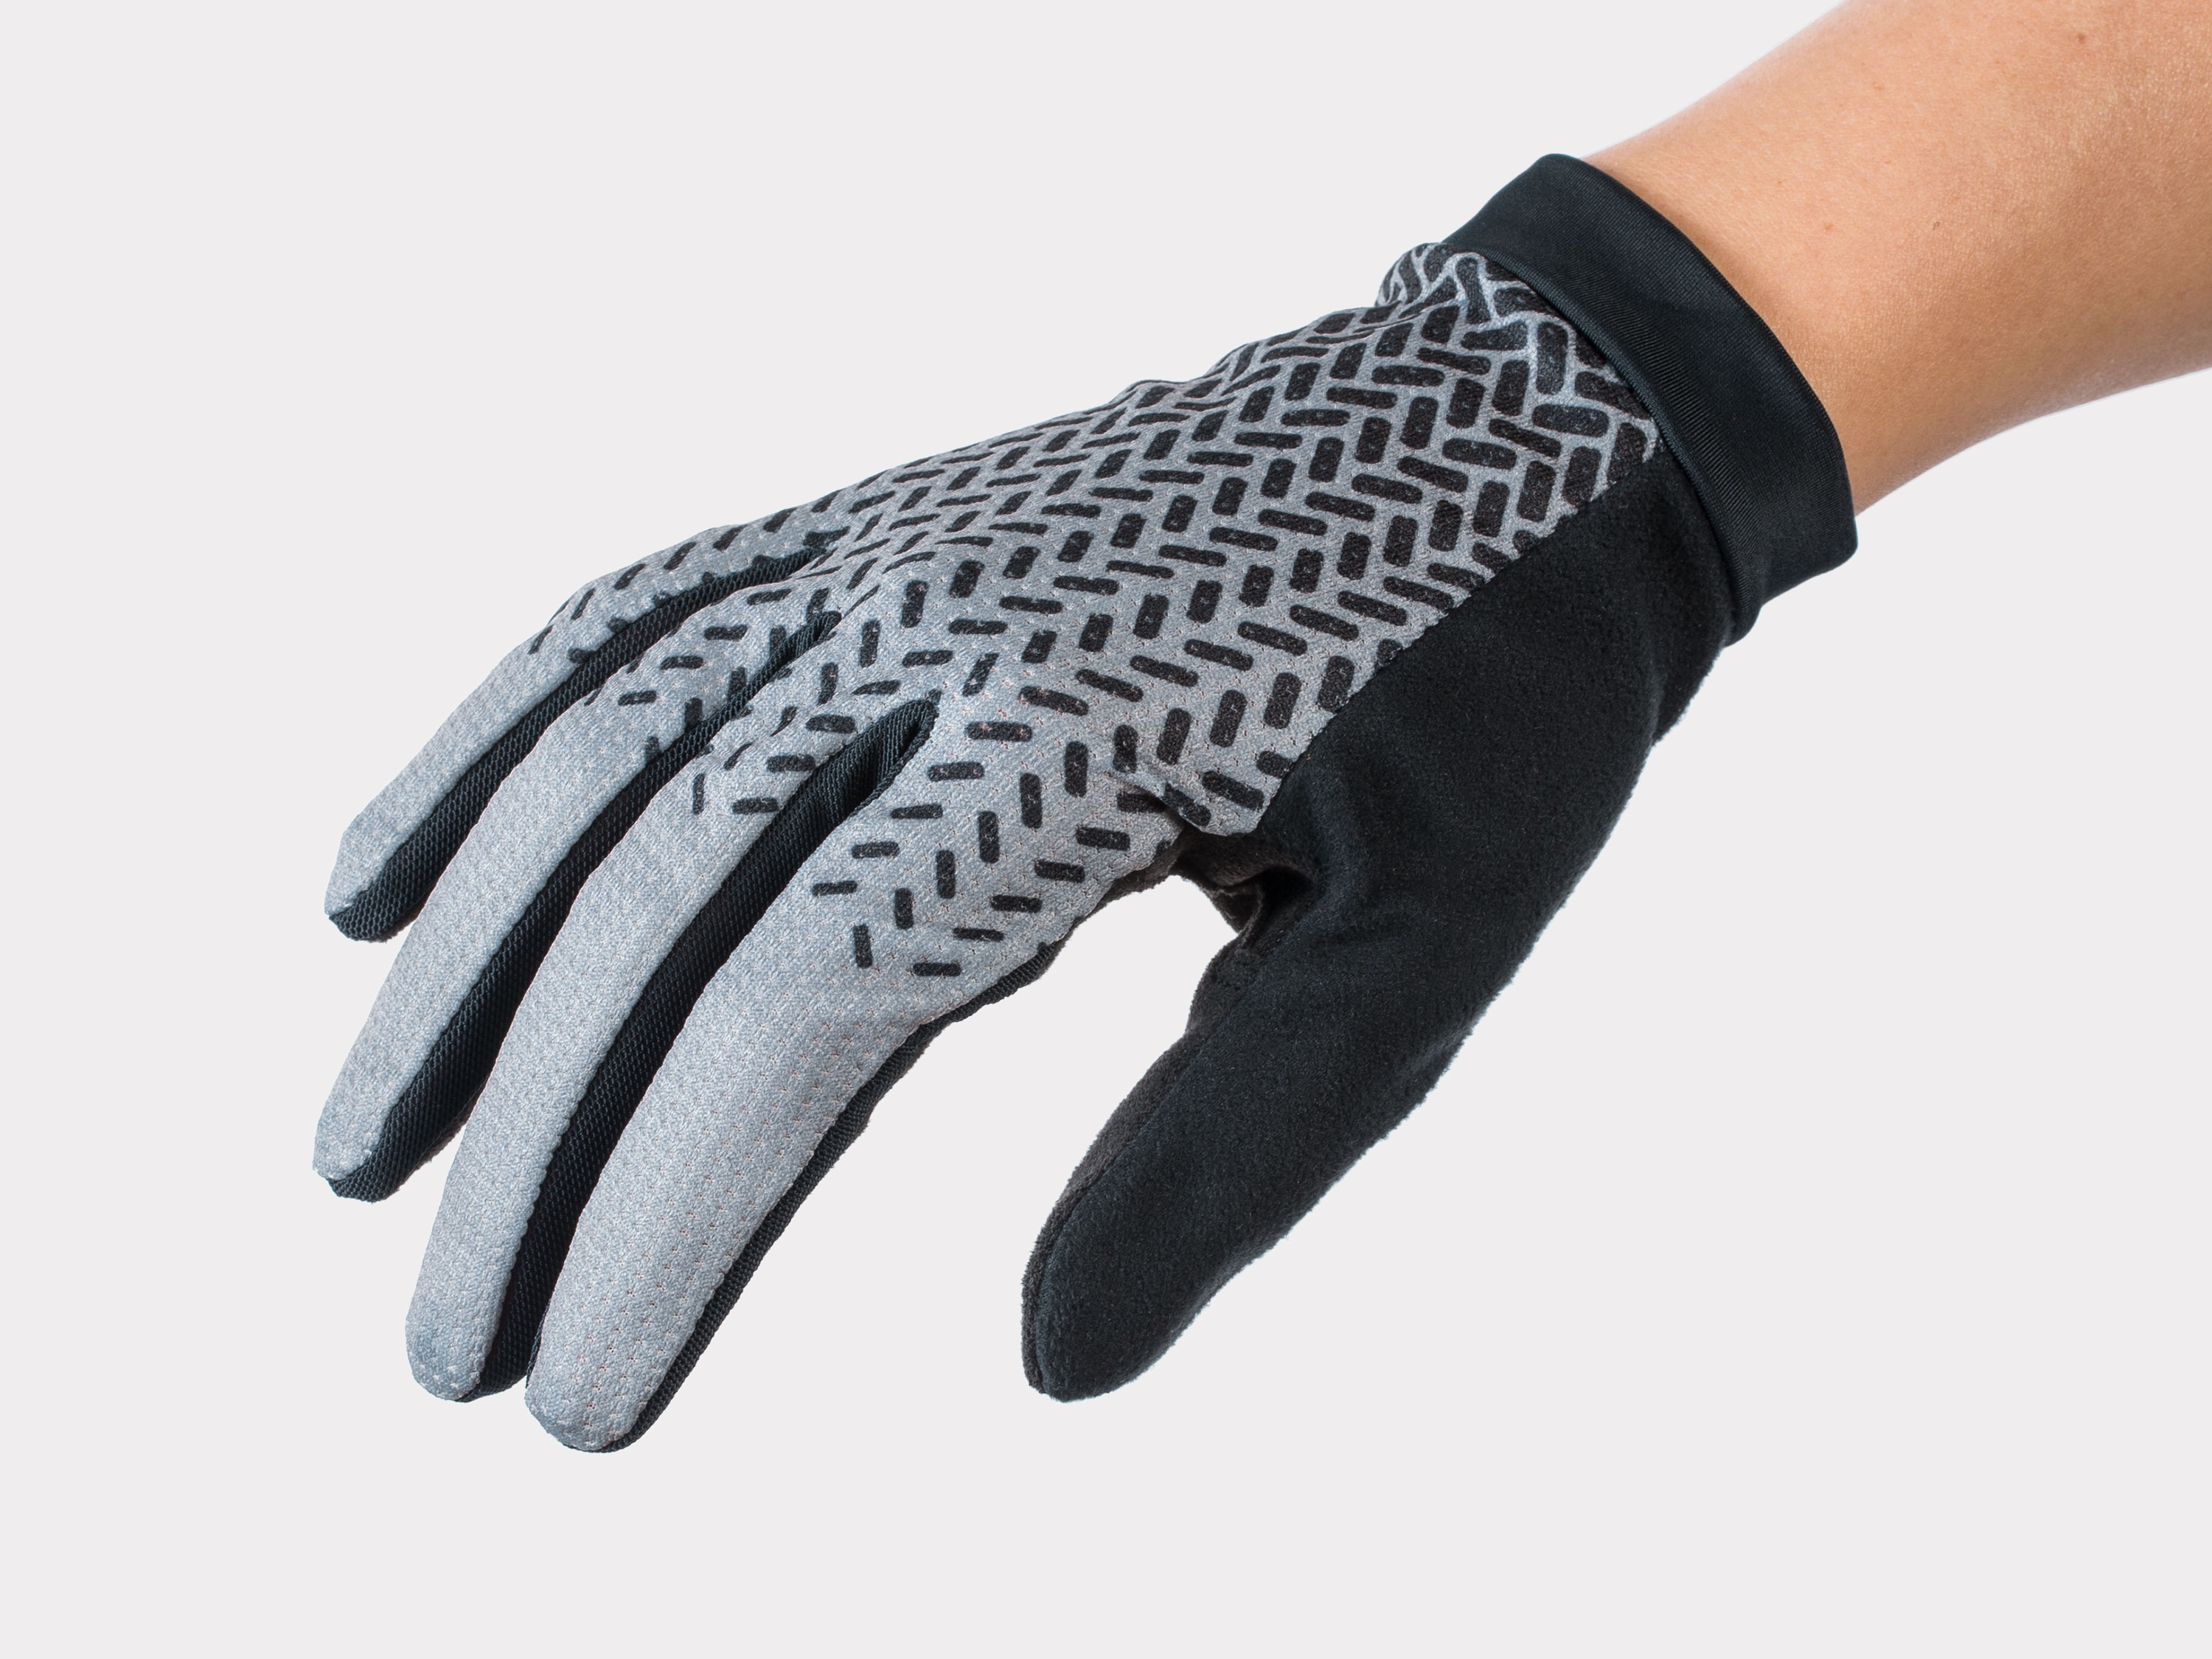 ladies mountain bike gloves